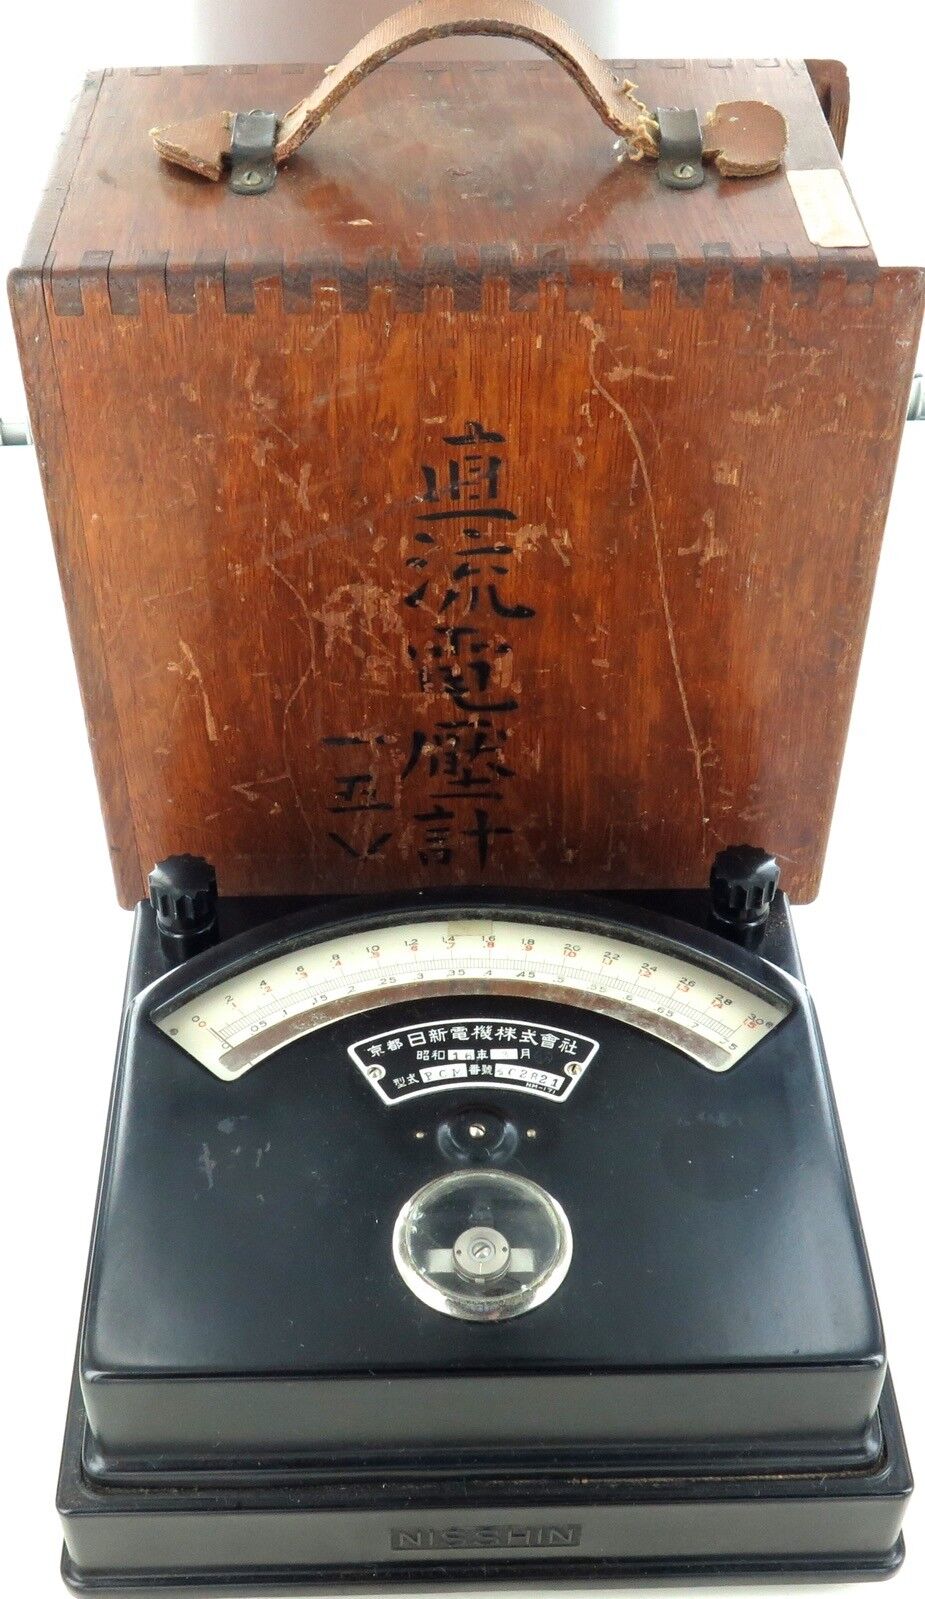 1941 NISSHIN PYROMETER / THERMOCOUPLE INDICATOR, ORIGINAL BOX + JAPANESE TEXT. 